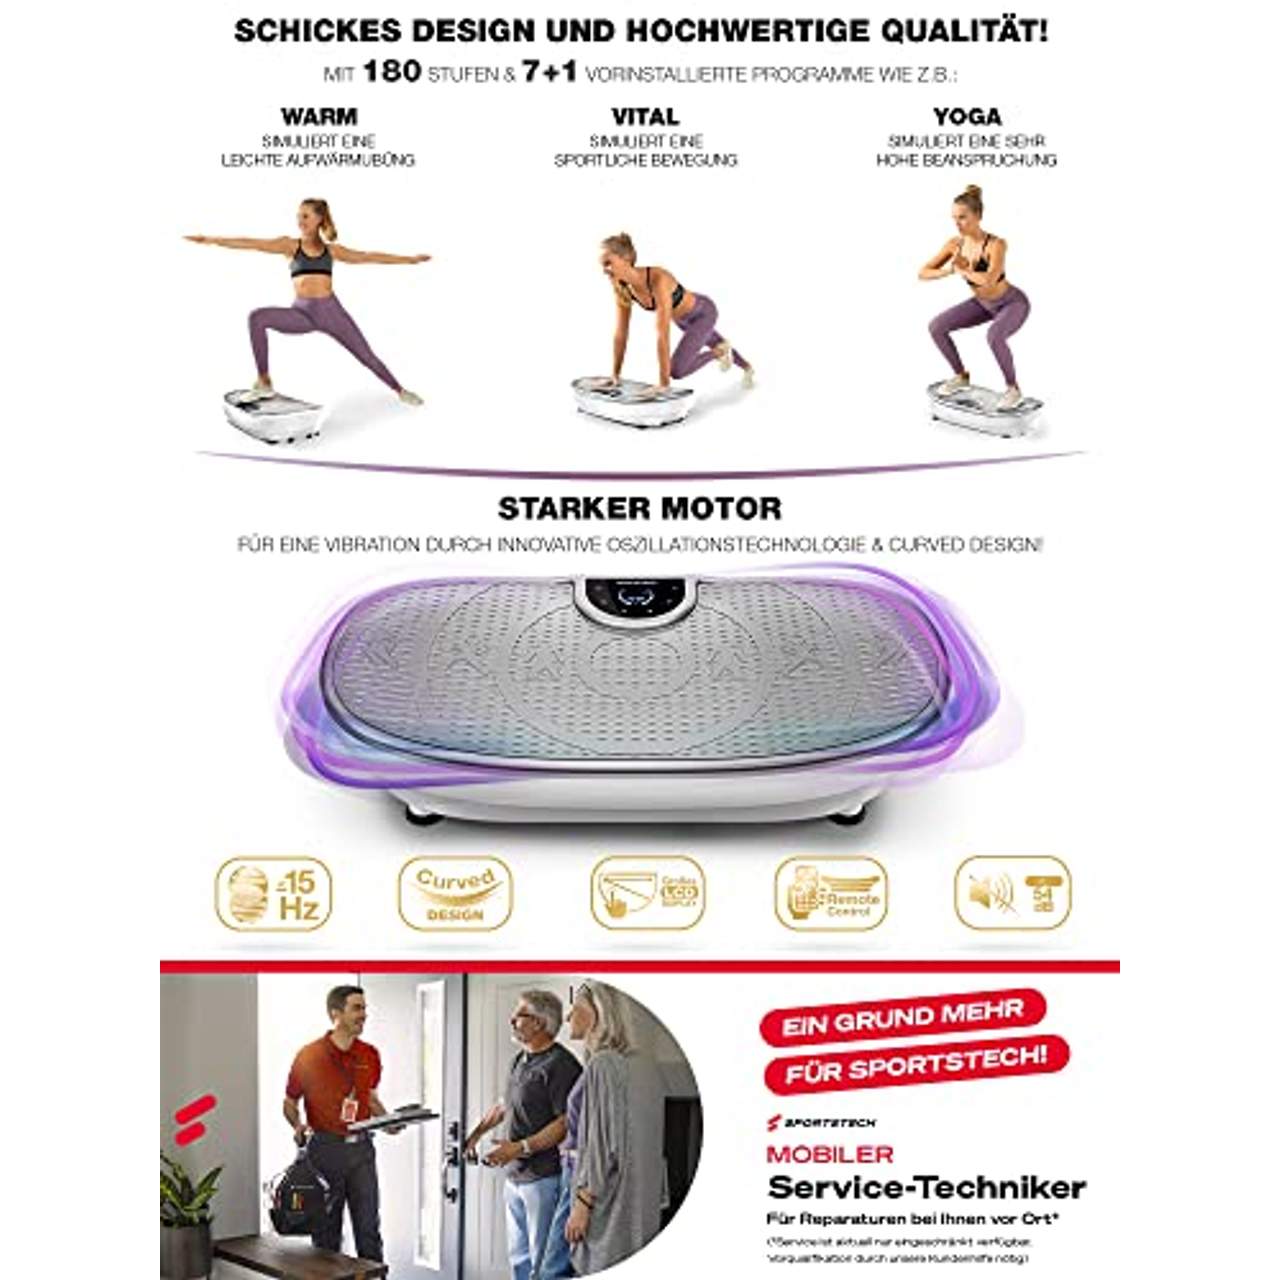 Sportstech Messe-Neuheit VP250 Vibrationsplatte im Edlen Curved Slim Design